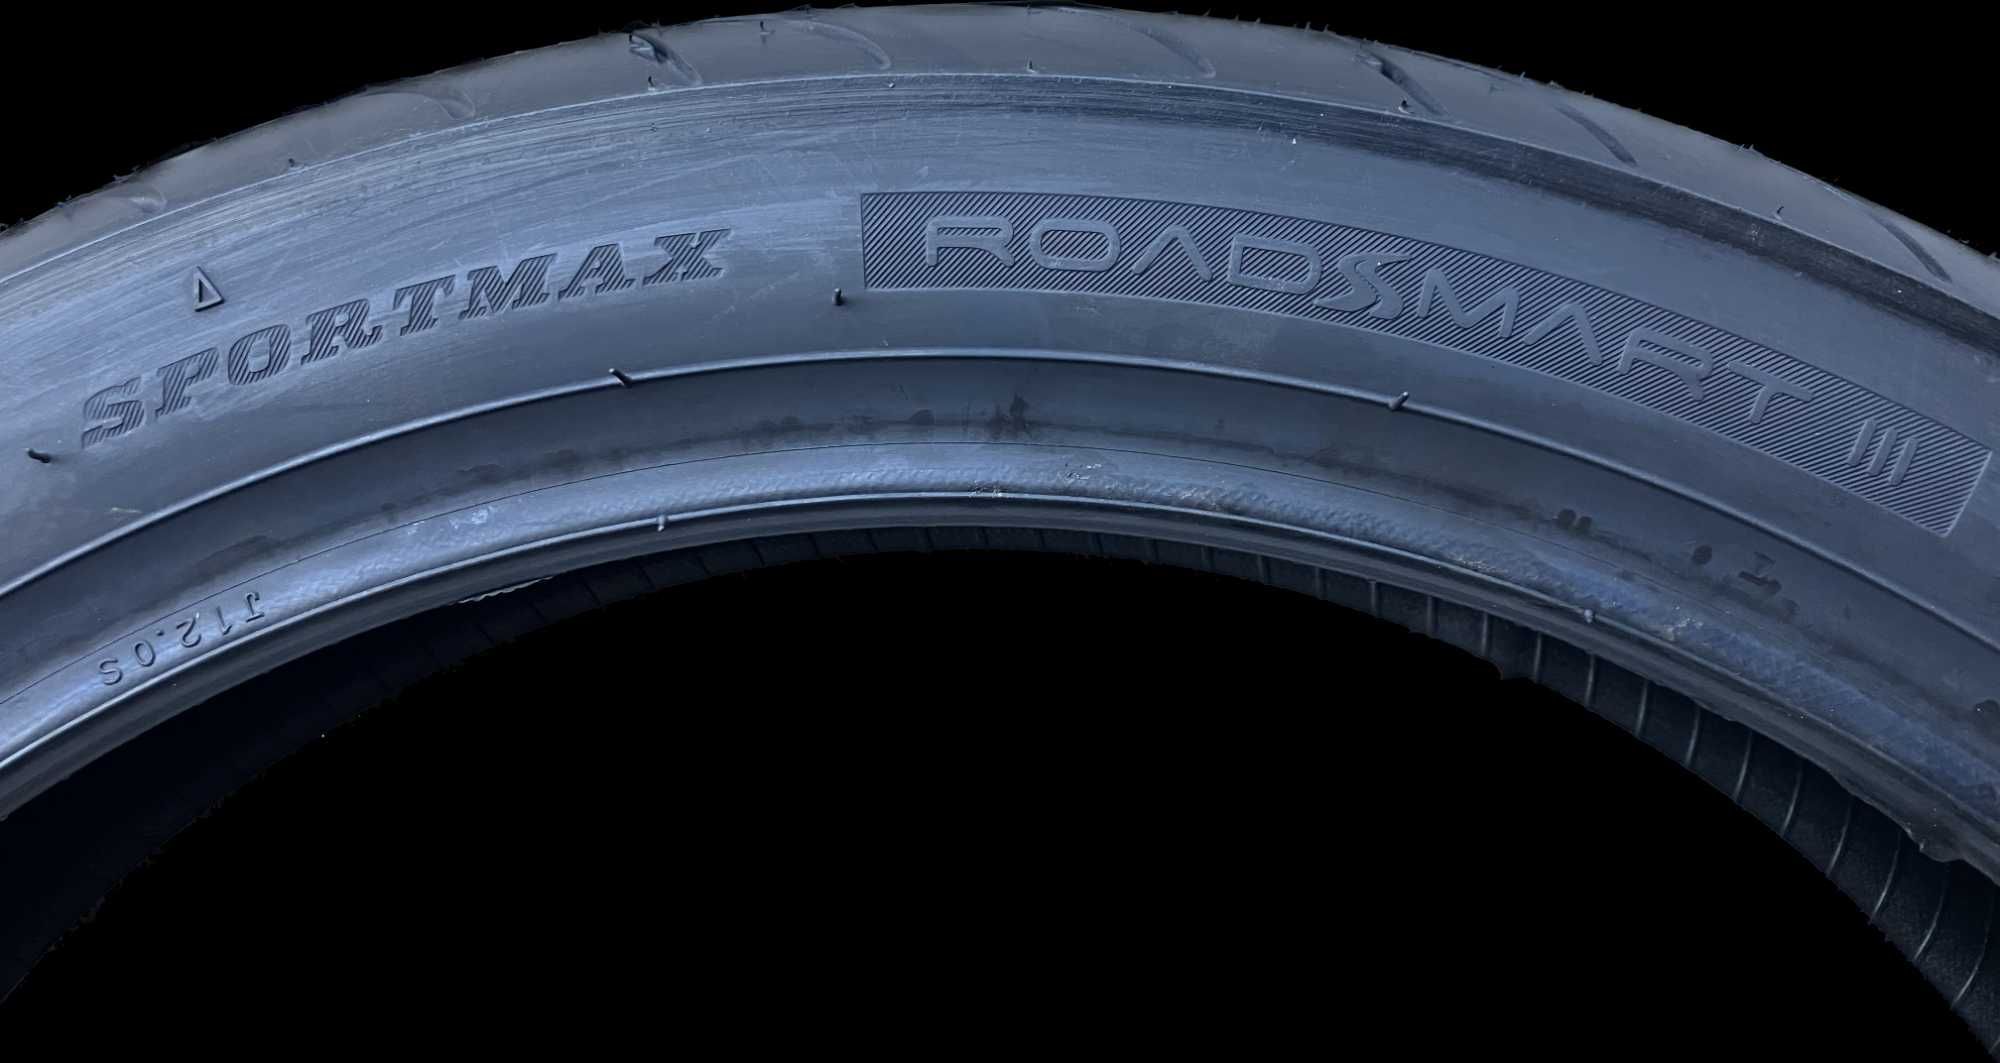 Dunlop Sportmax Roadsmart III 110/80R18 58V R1100 Scrambler ST1100 GTR